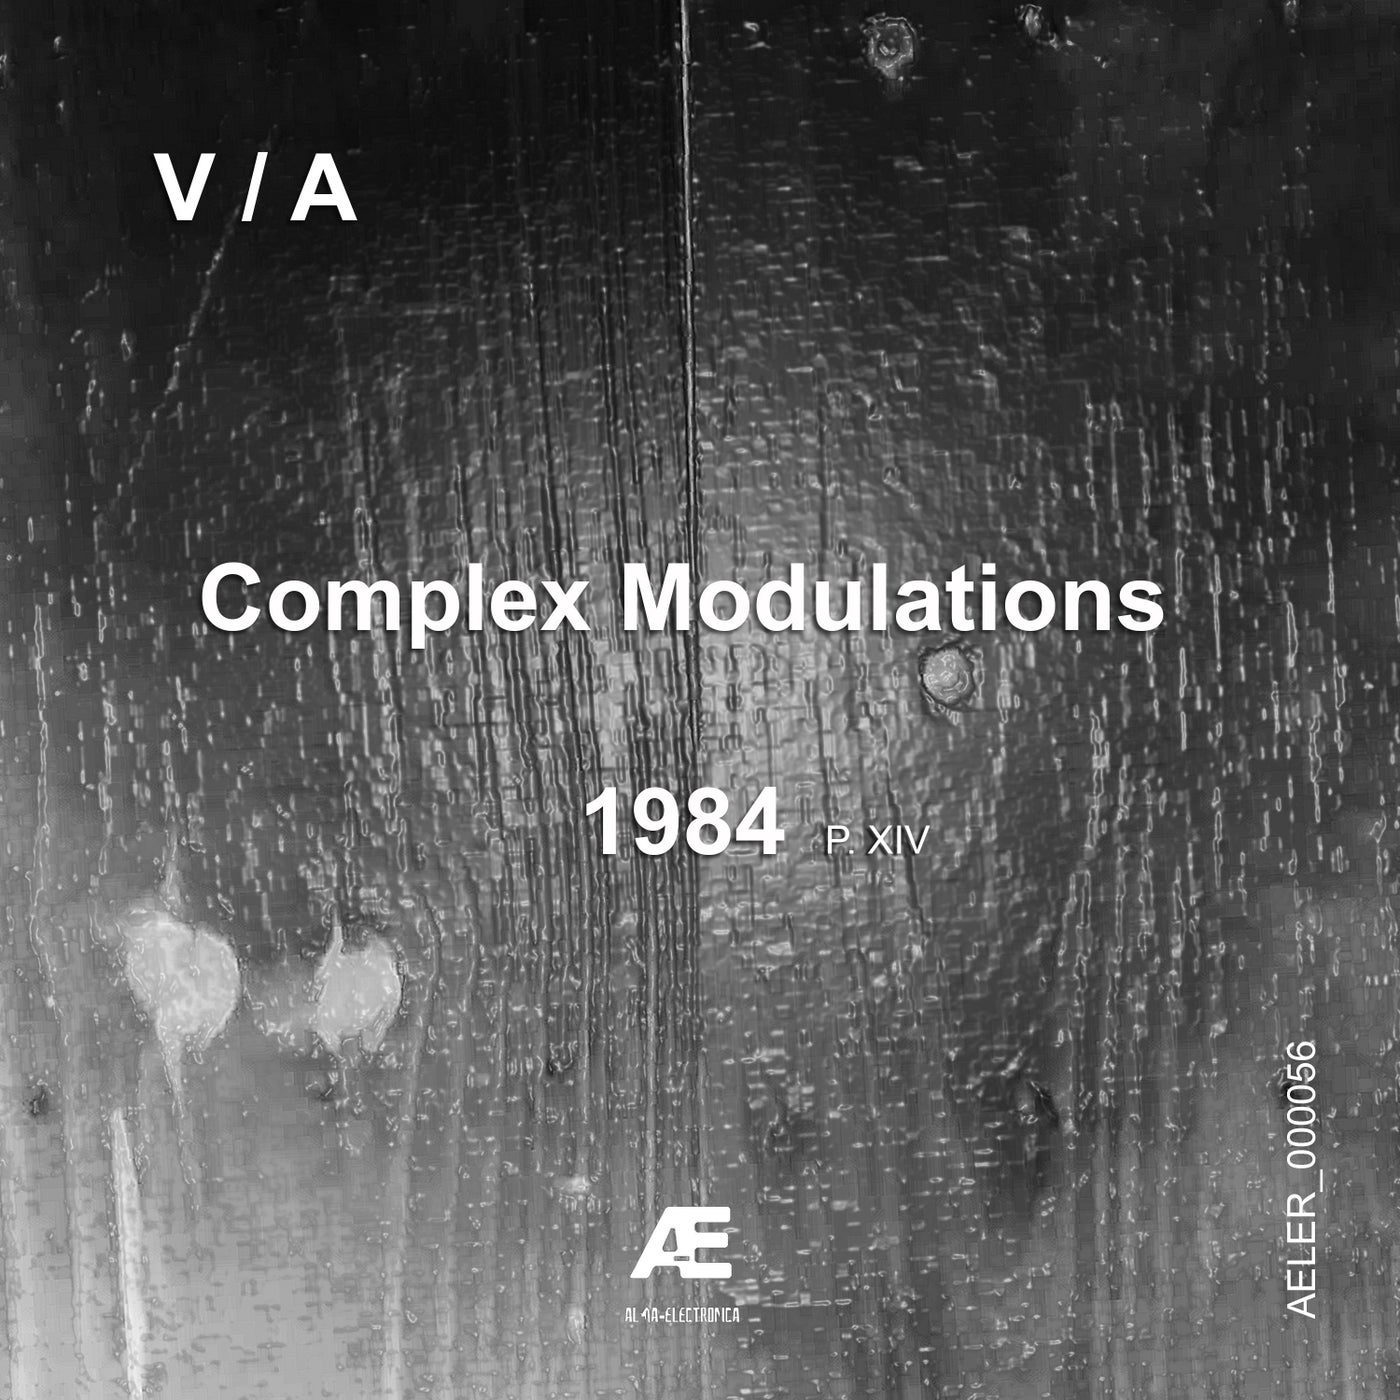 Complex Modulations 1984, Pt. XIV